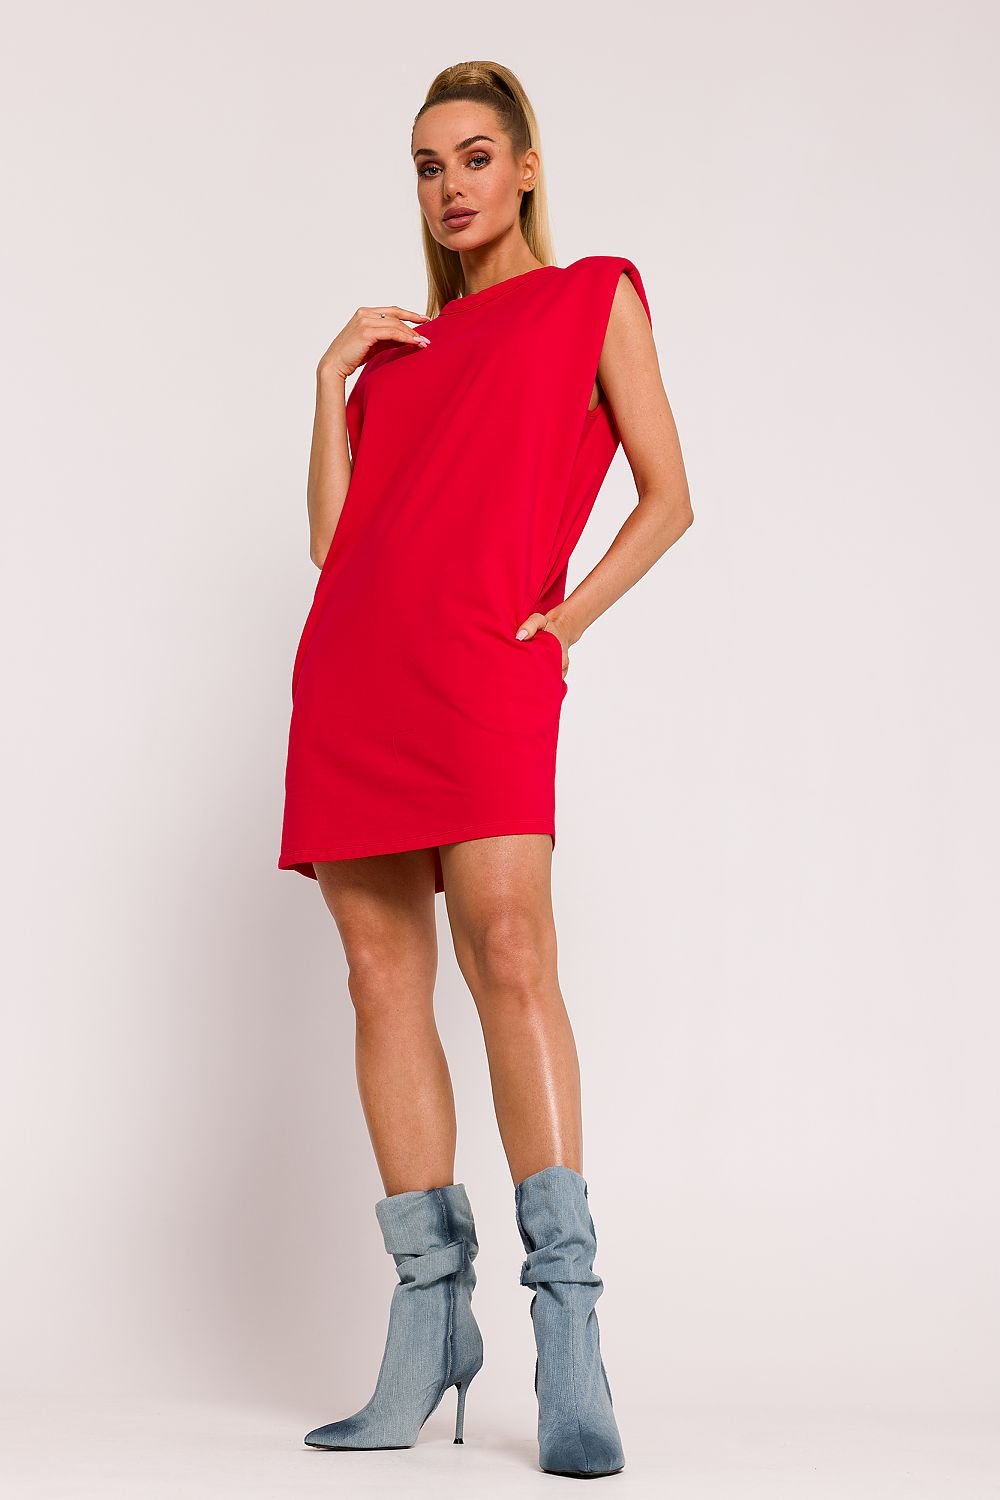 TEEK - Shrug Solid Pocketed Sleeveless Dress DRESS TEEK MH red L 